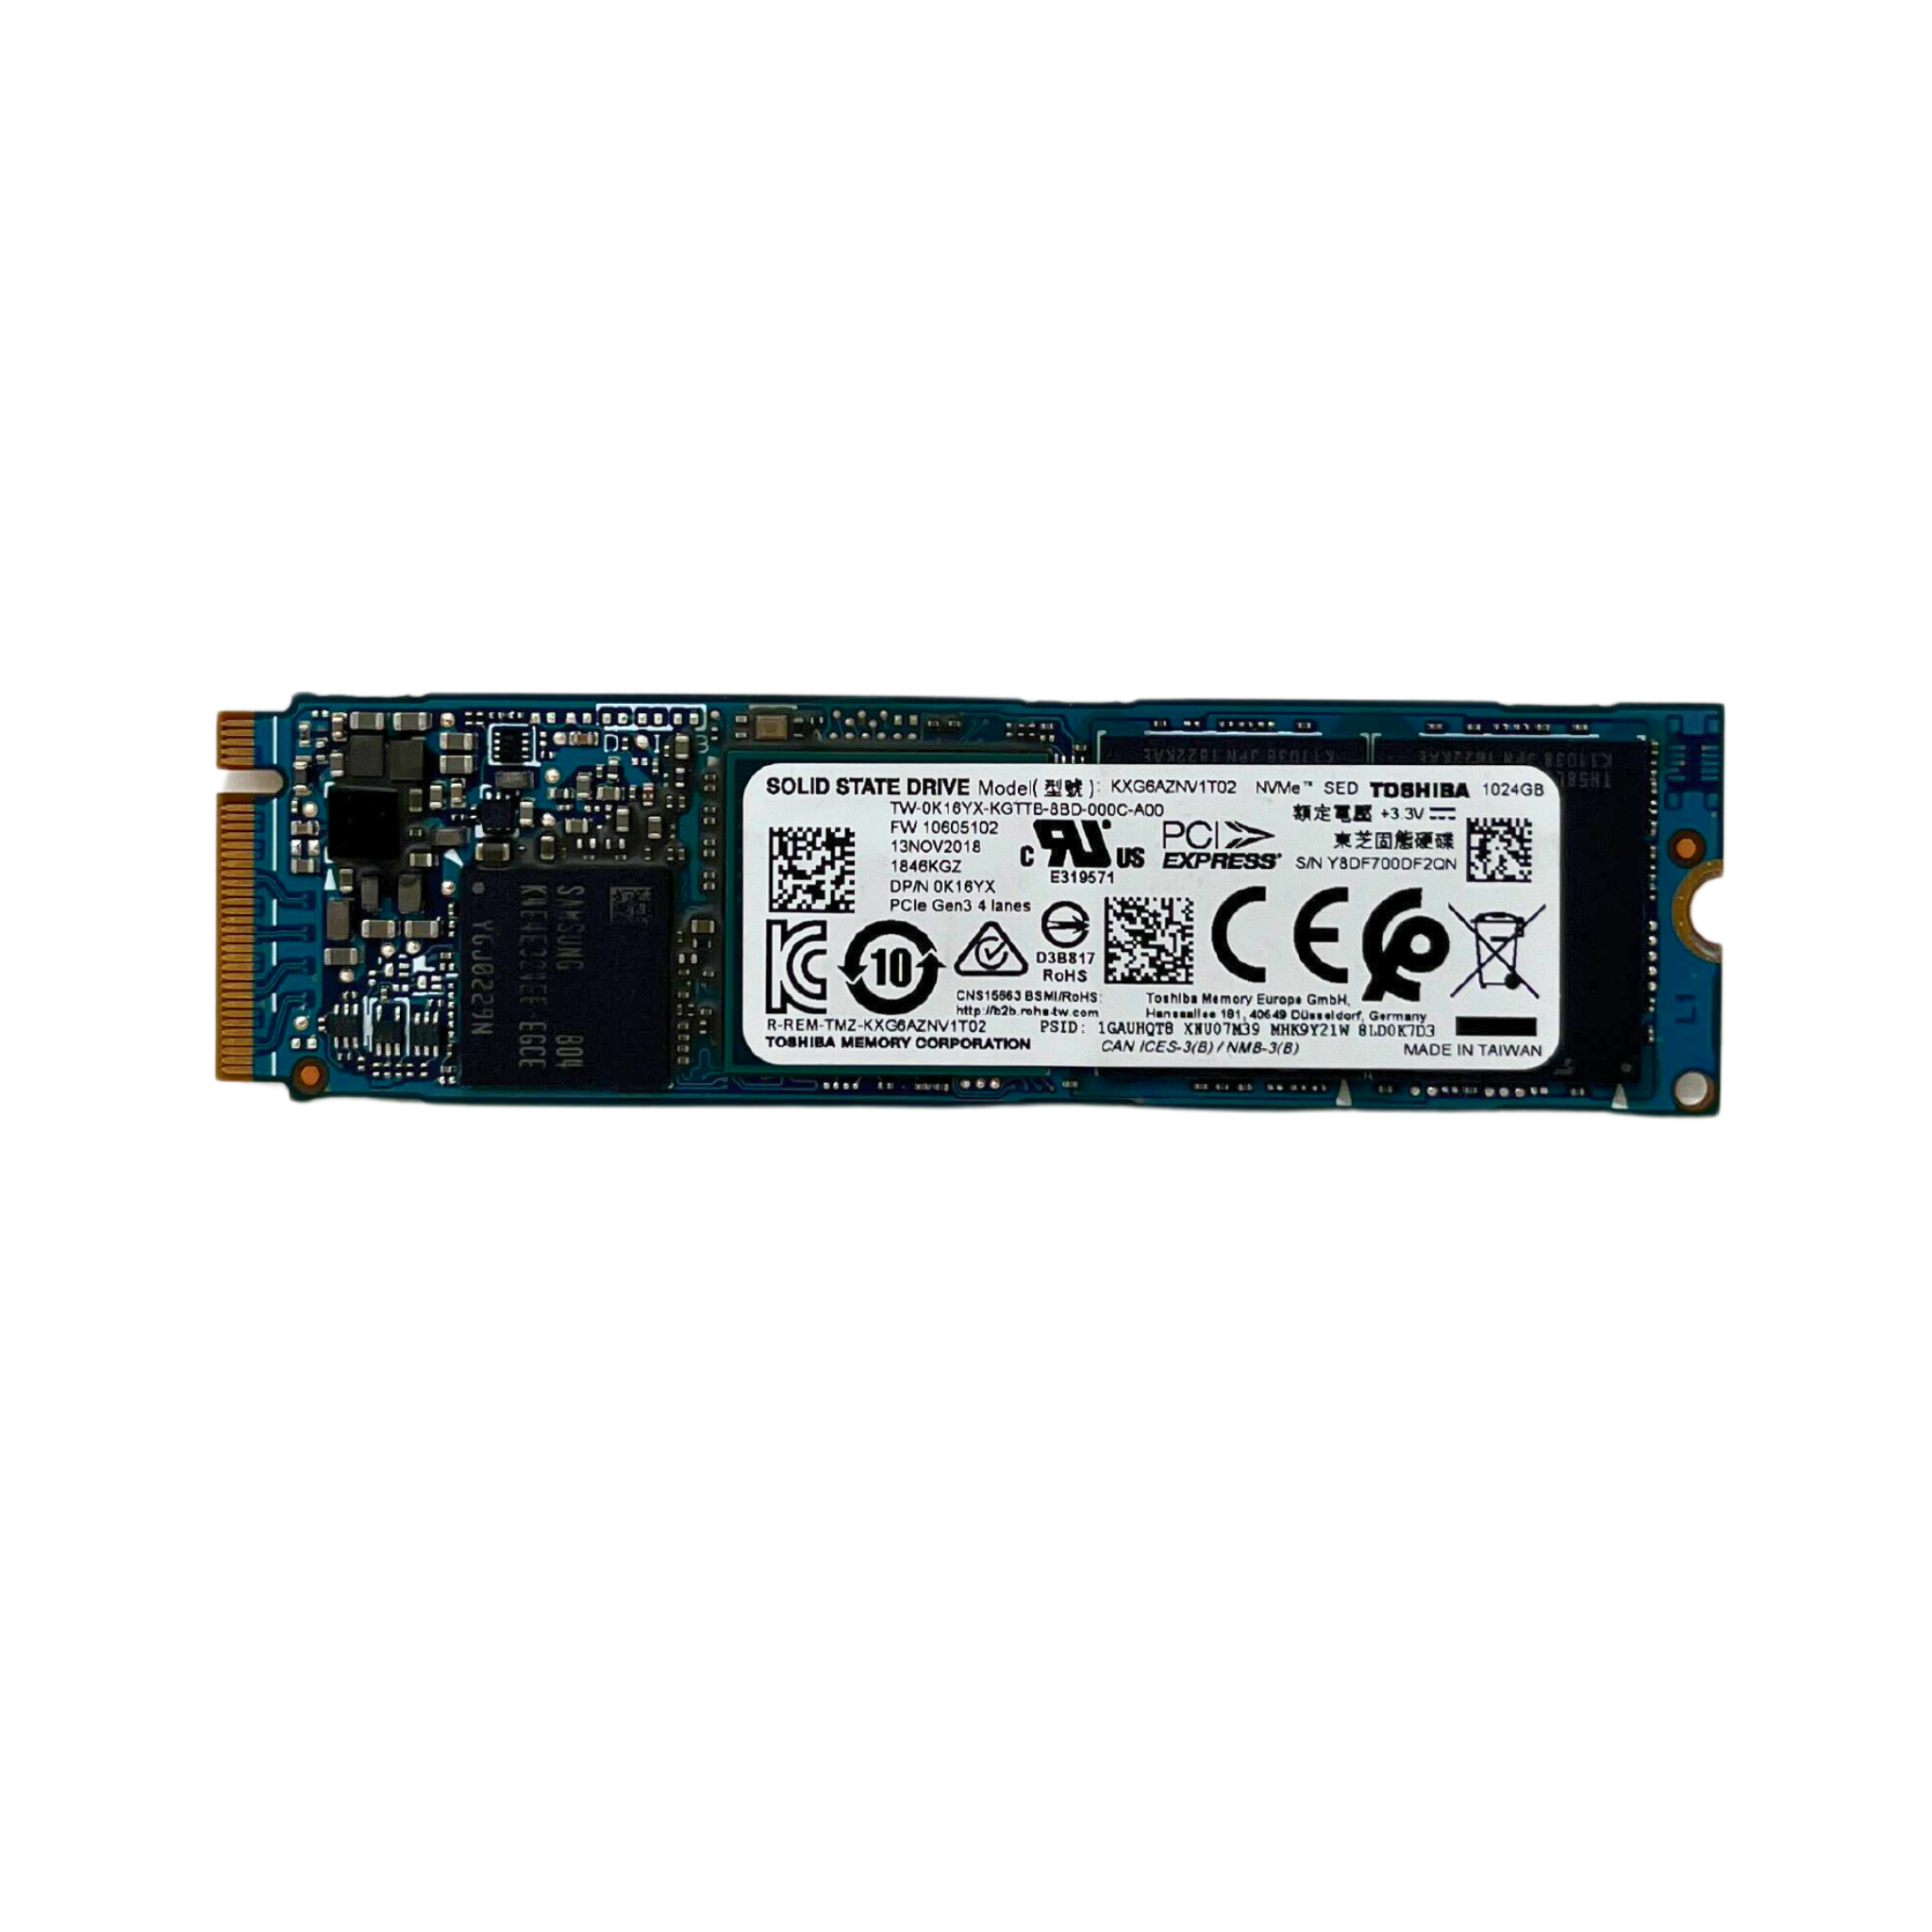 Dell 1TB M.2 2280 NVMe PCIe Gen3 x4 SSD Solid State Drive KXG6AZNV1T02 (KXG6AZNV1T02)